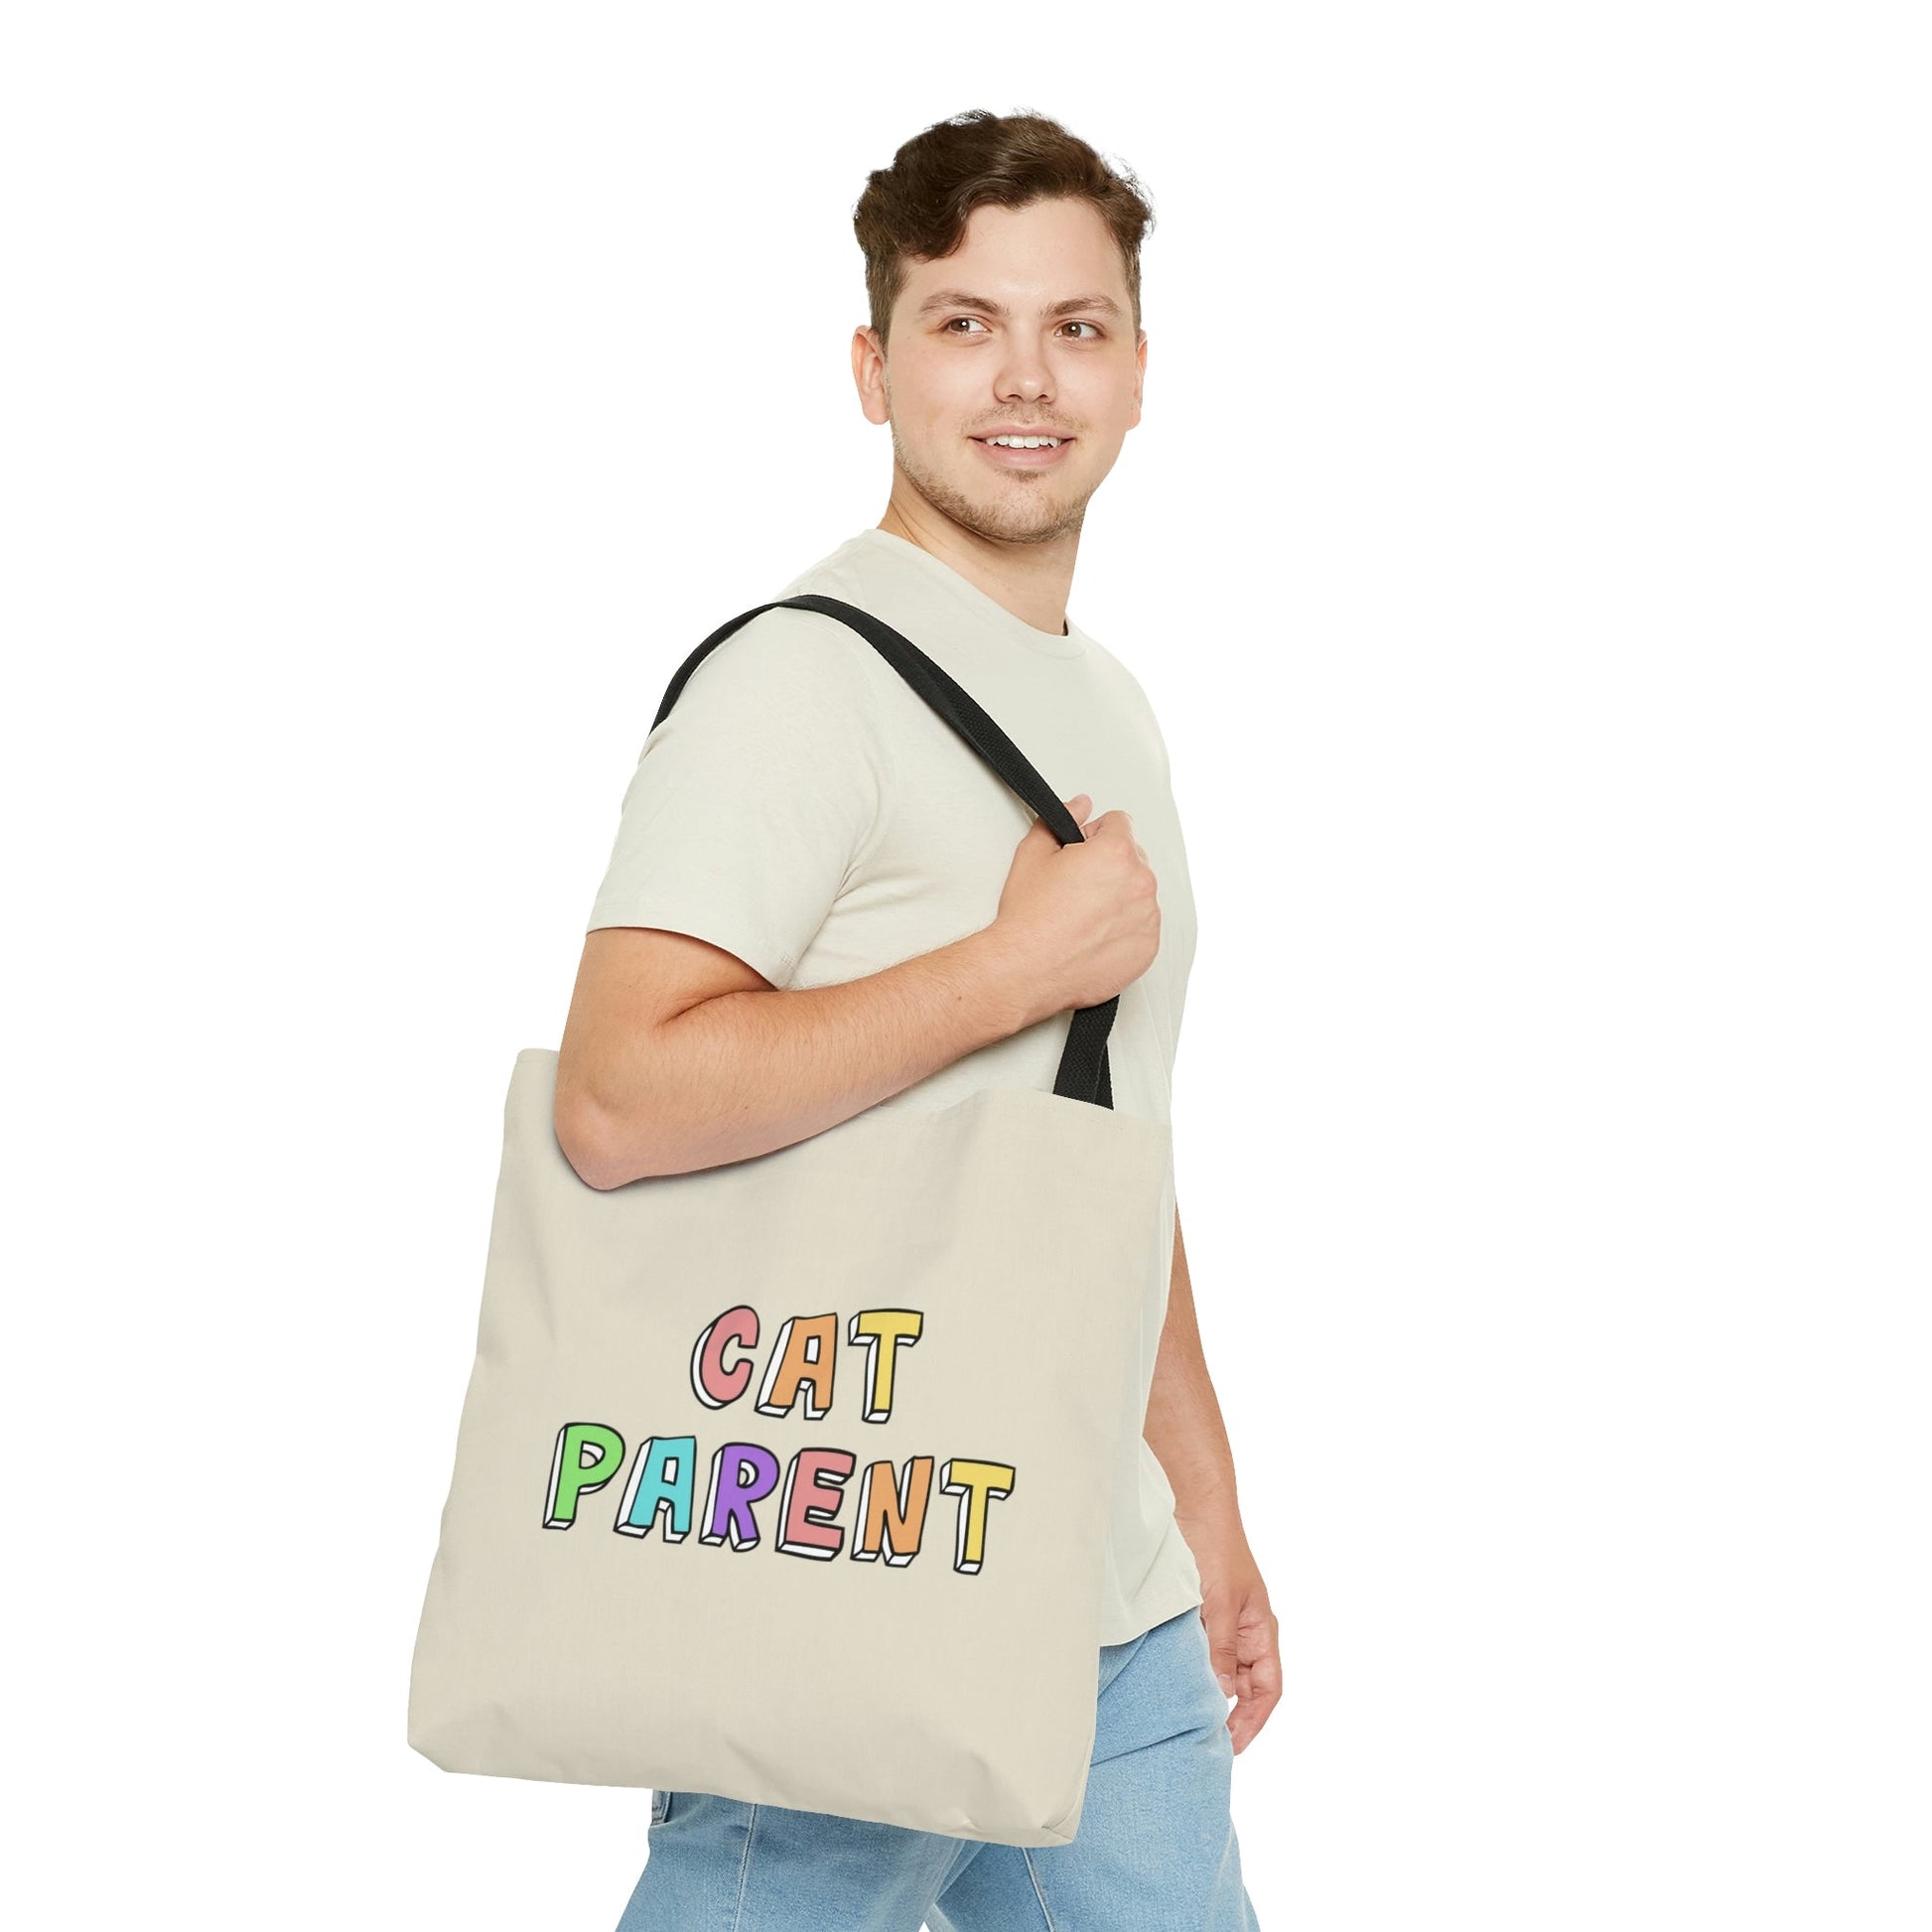 Cat Parent | Tote Bag - Detezi Designs-29433676010975447758